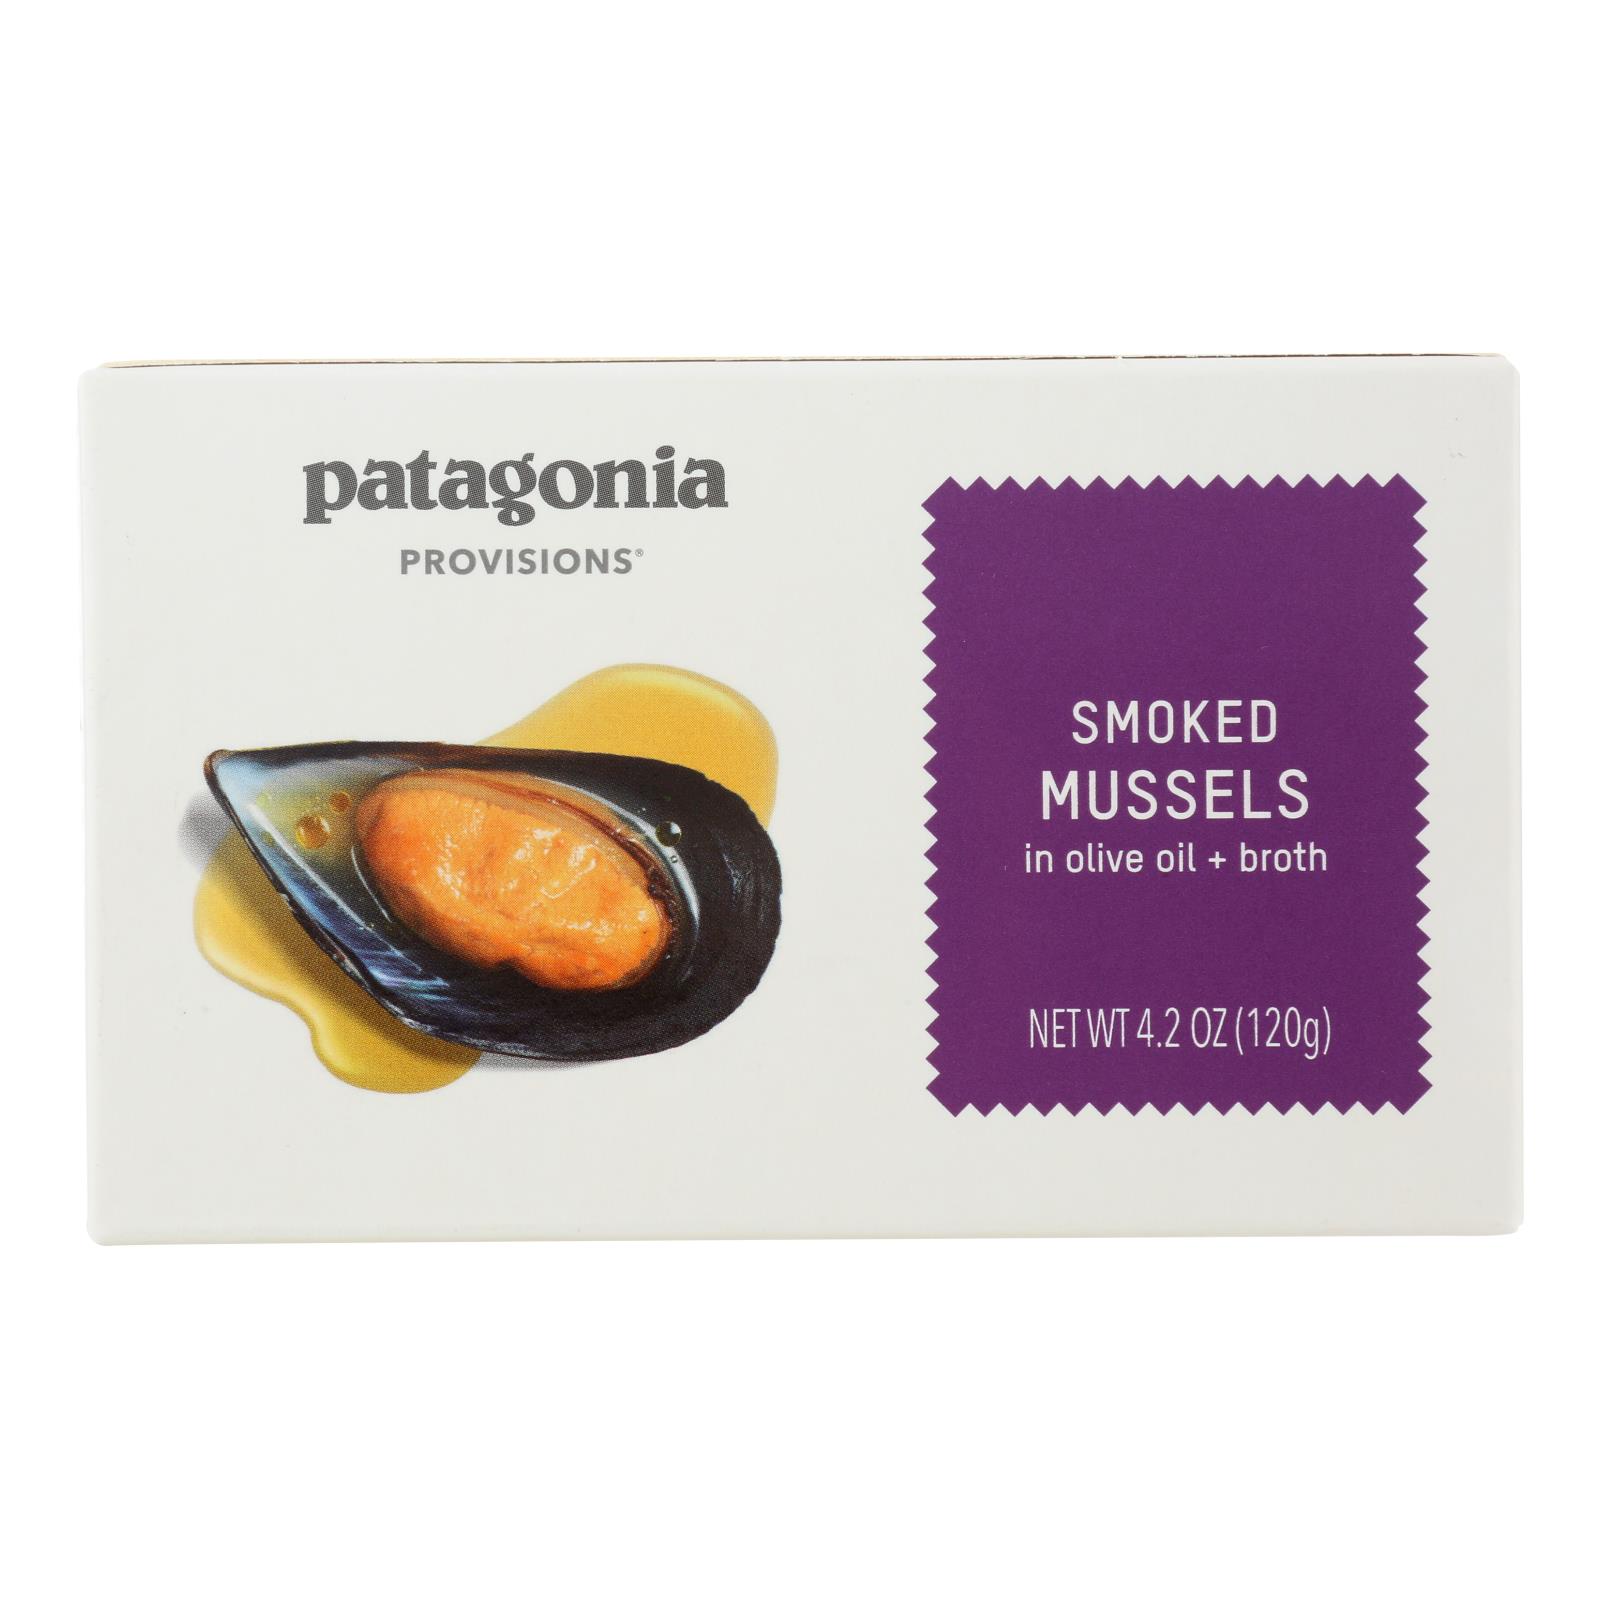 Patagonia - Mussels Smoked - 10개 묶음상품 - 4.2 OZ